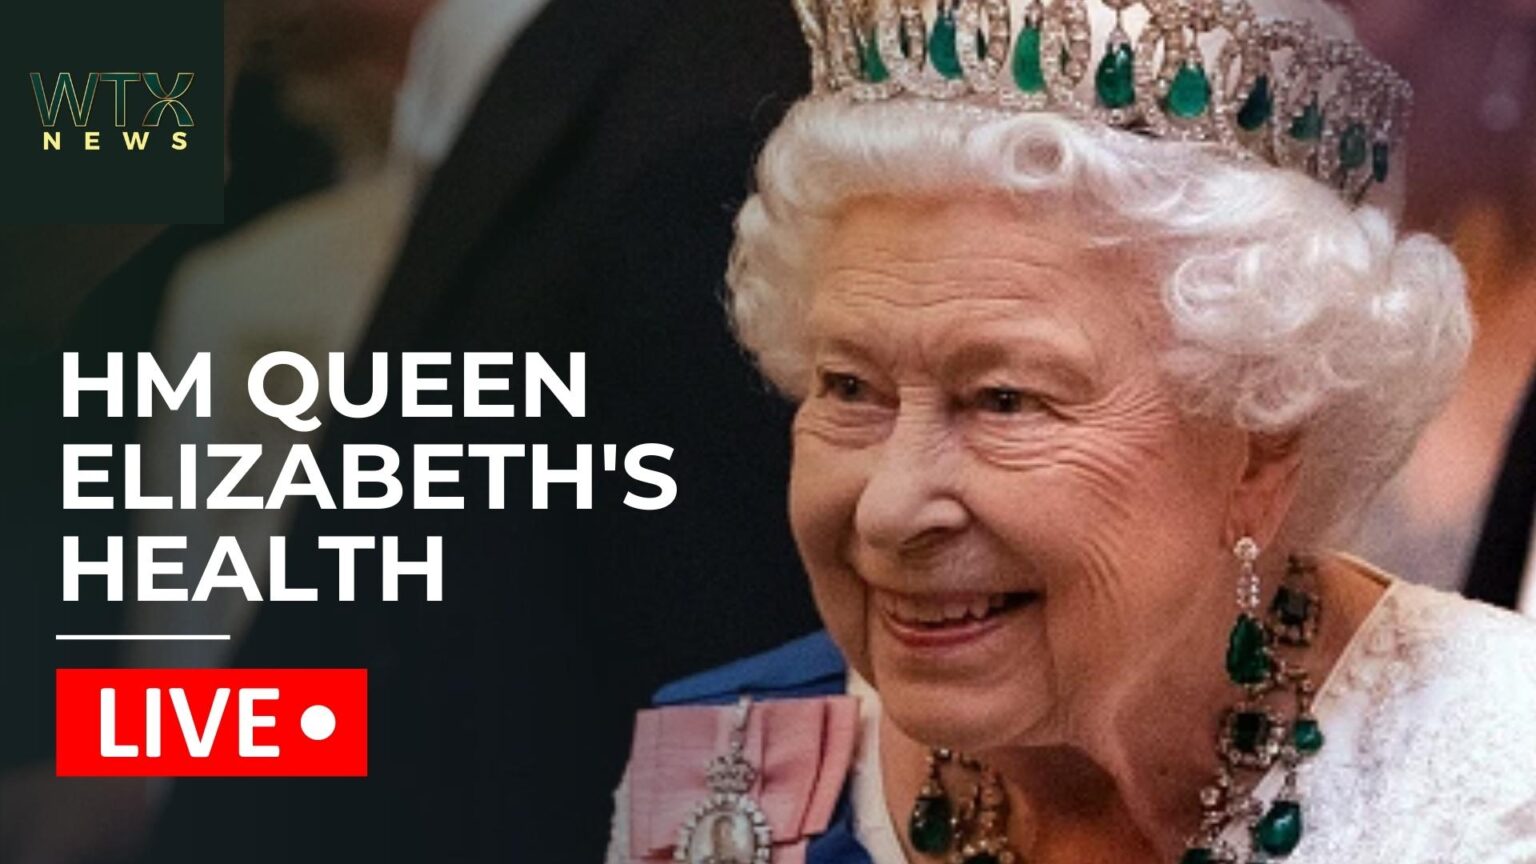 Balmoral: Royal LIVE - HM Queen Elizabeth's health update